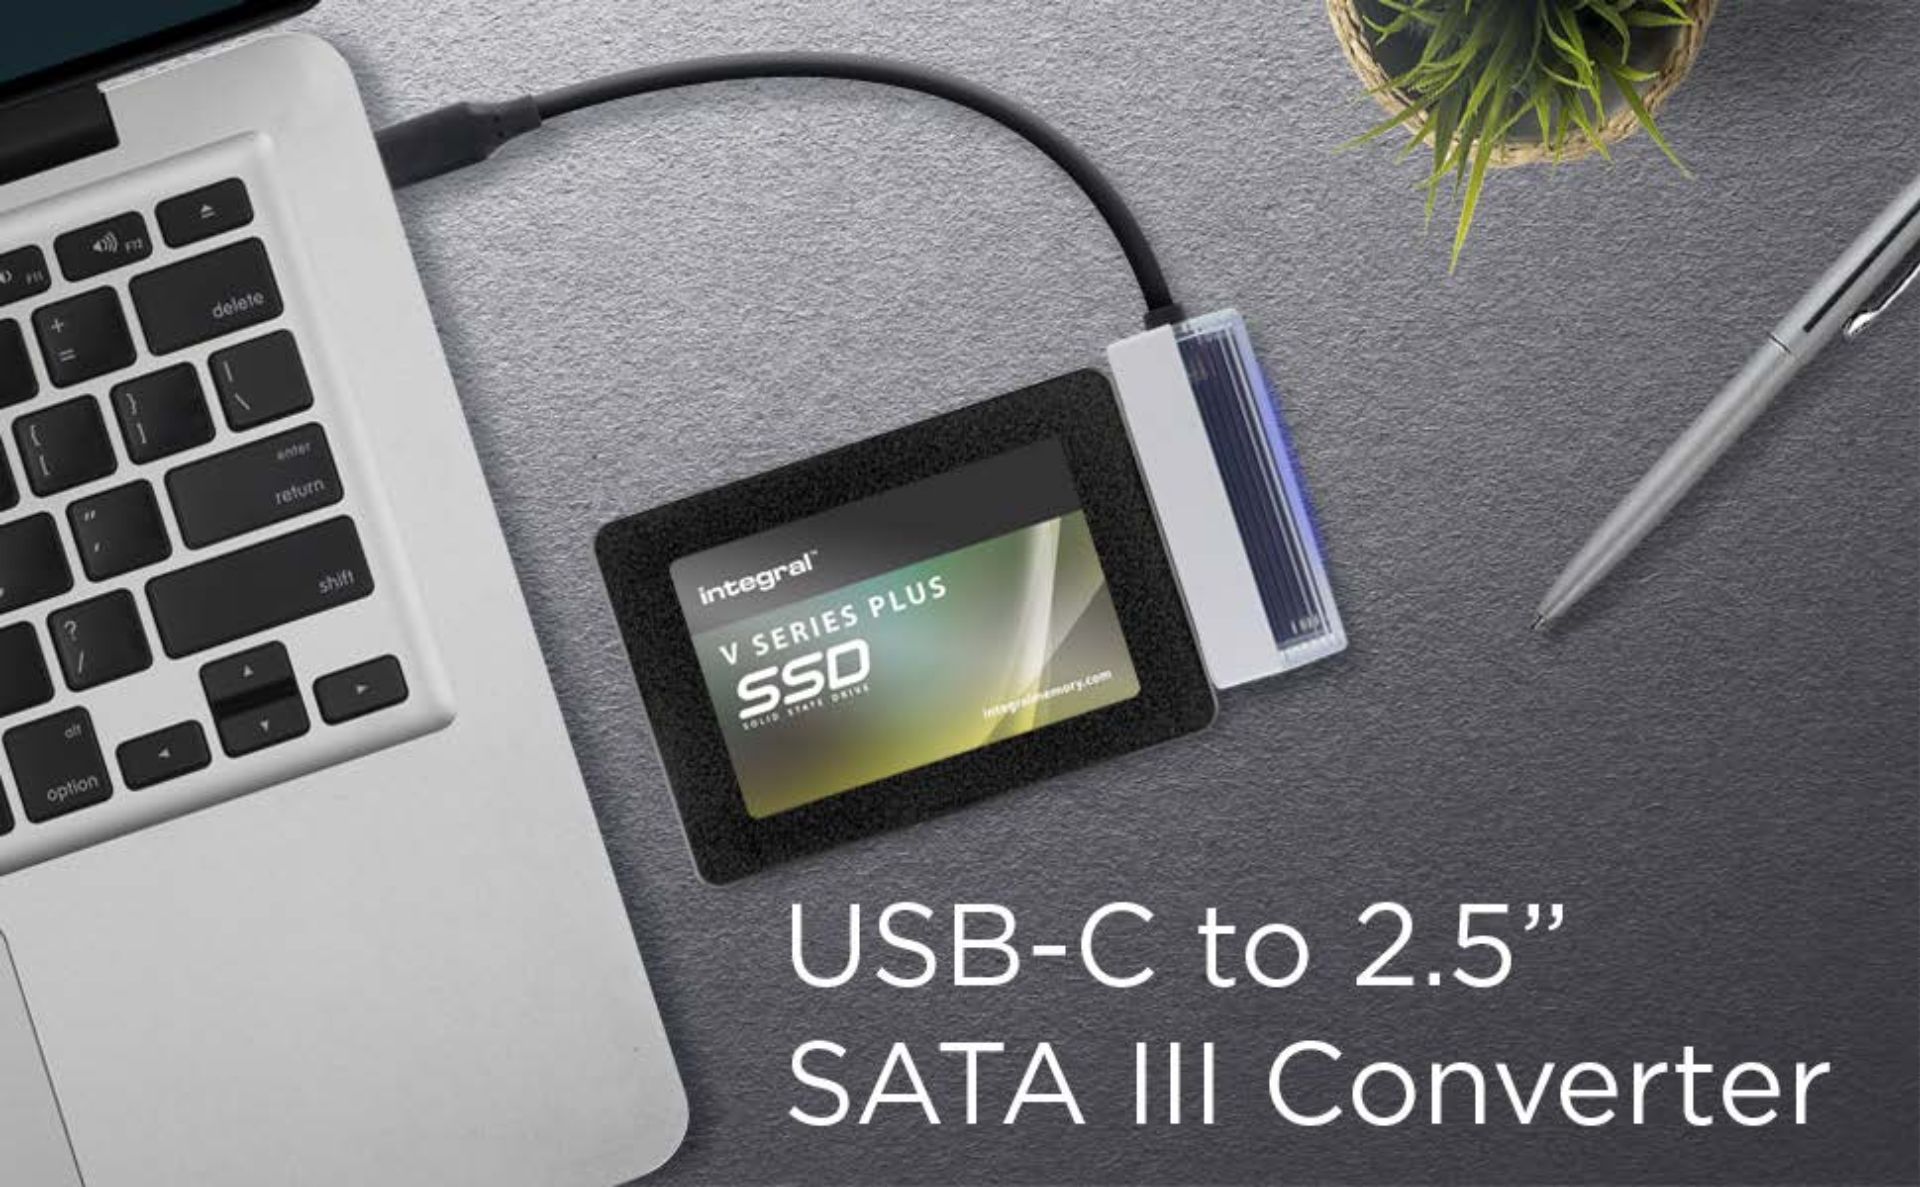 USB C TO 2.5” SATA III CONVERTER plugged into laptop